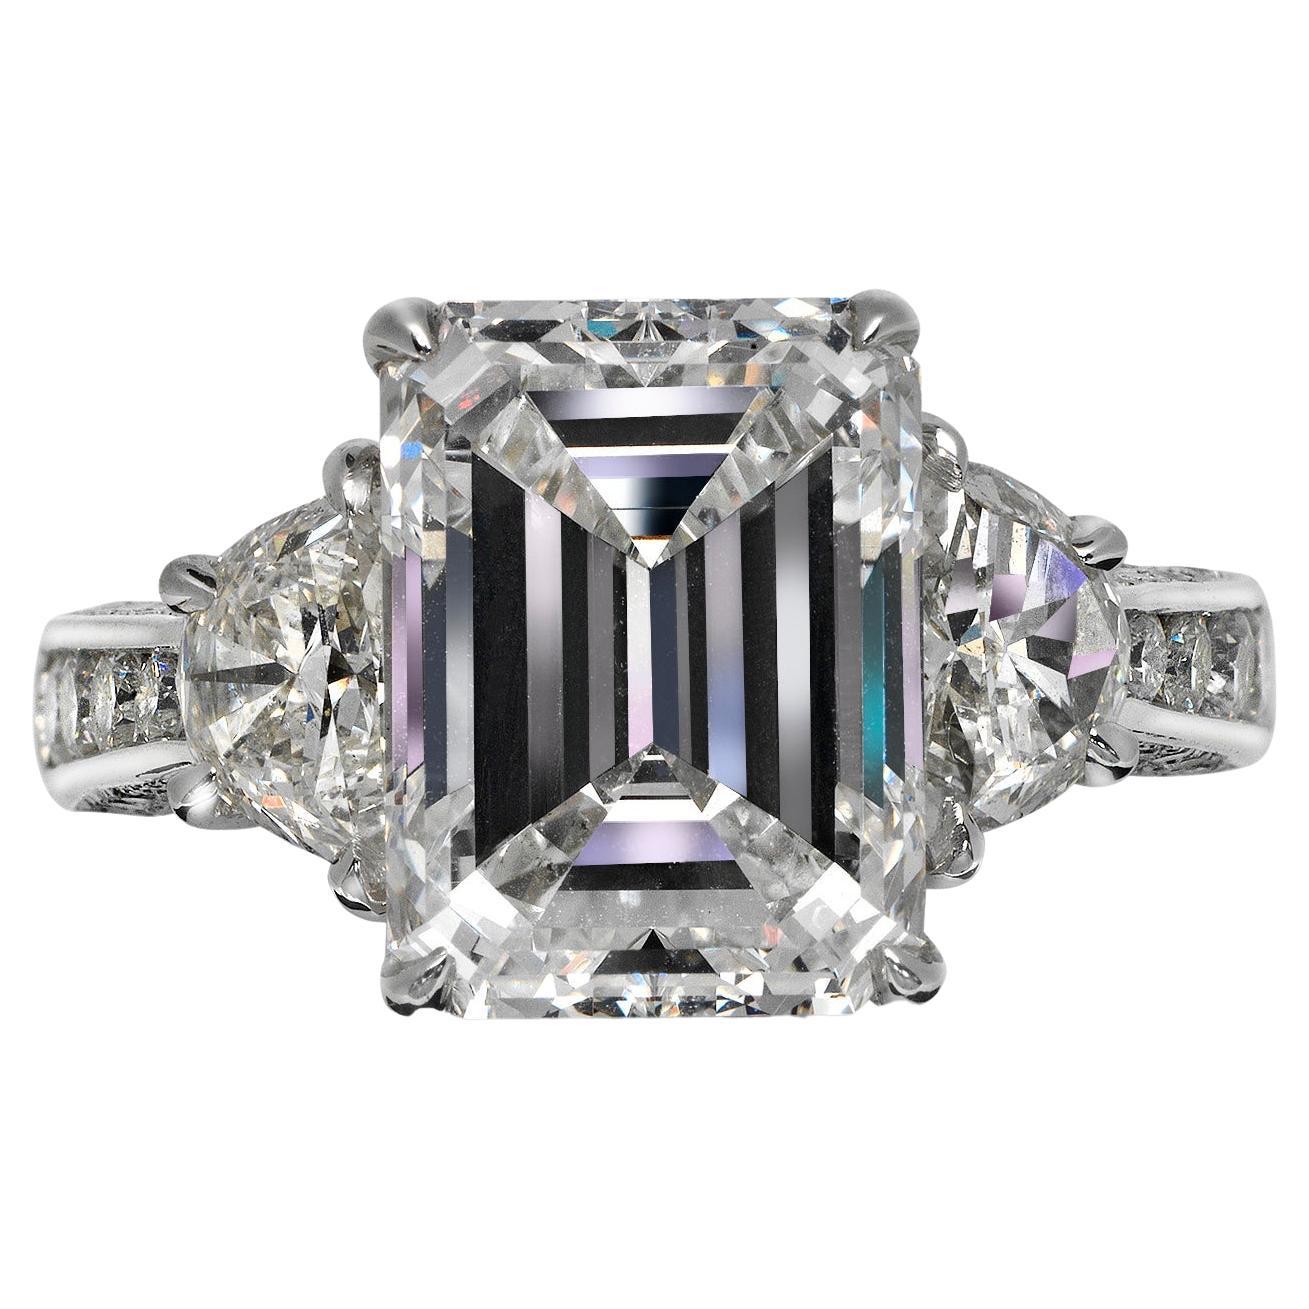  7 Carat Emerald Cut Diamond Engagement Ring EGL Certified Fracture Filled